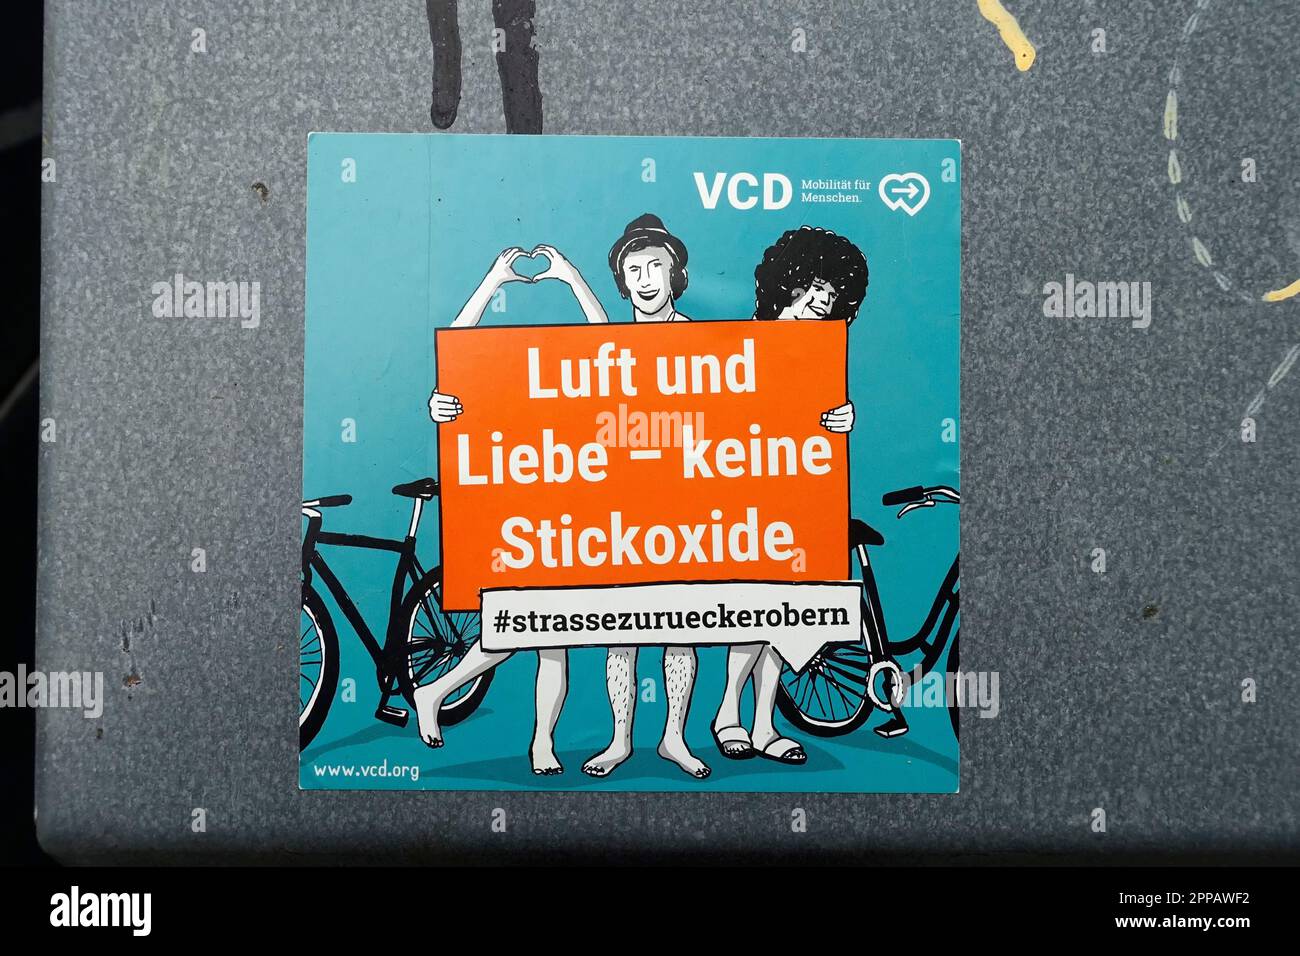 Adesivo di VCD, Berlino, Germania Foto Stock